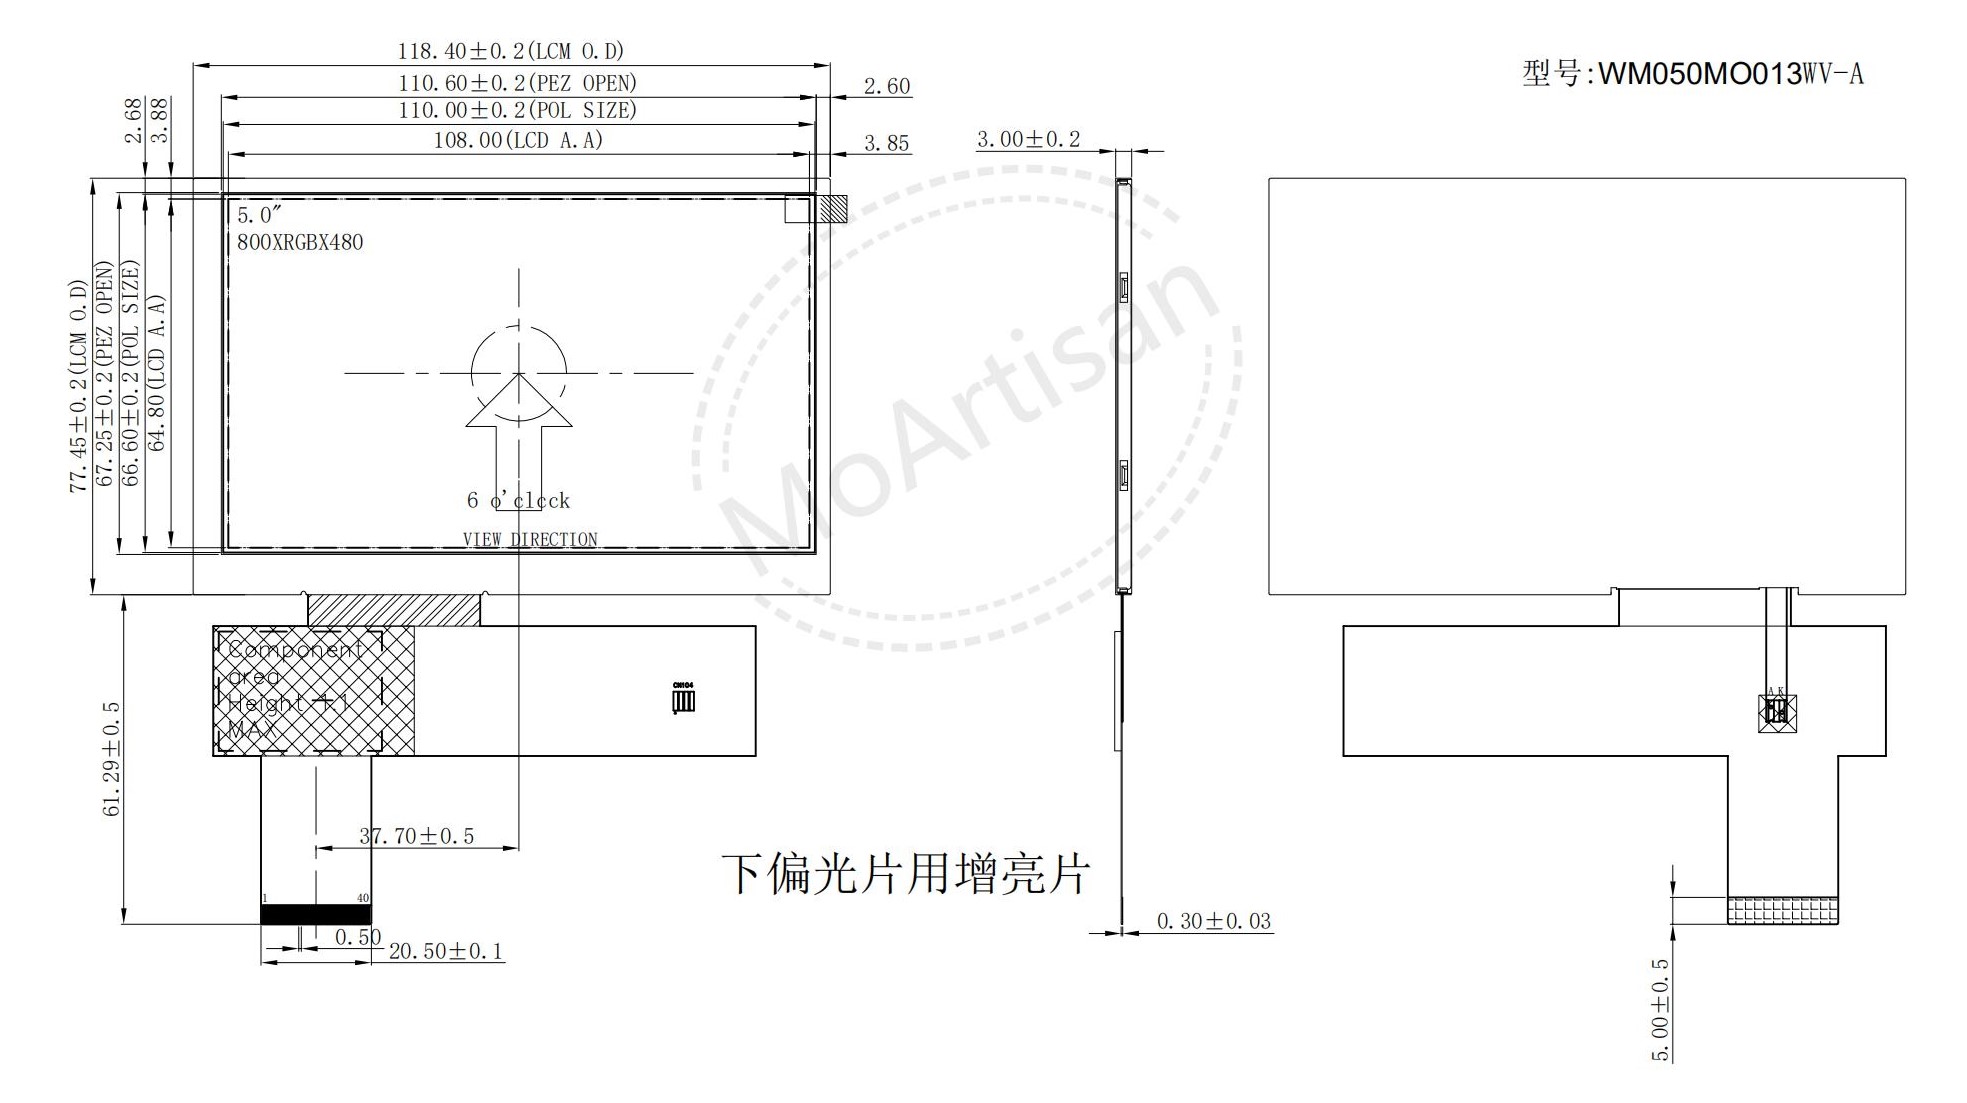 5.0 Inch TFT 800(RGB)*480 LCD module 1000 nits brightness drawings